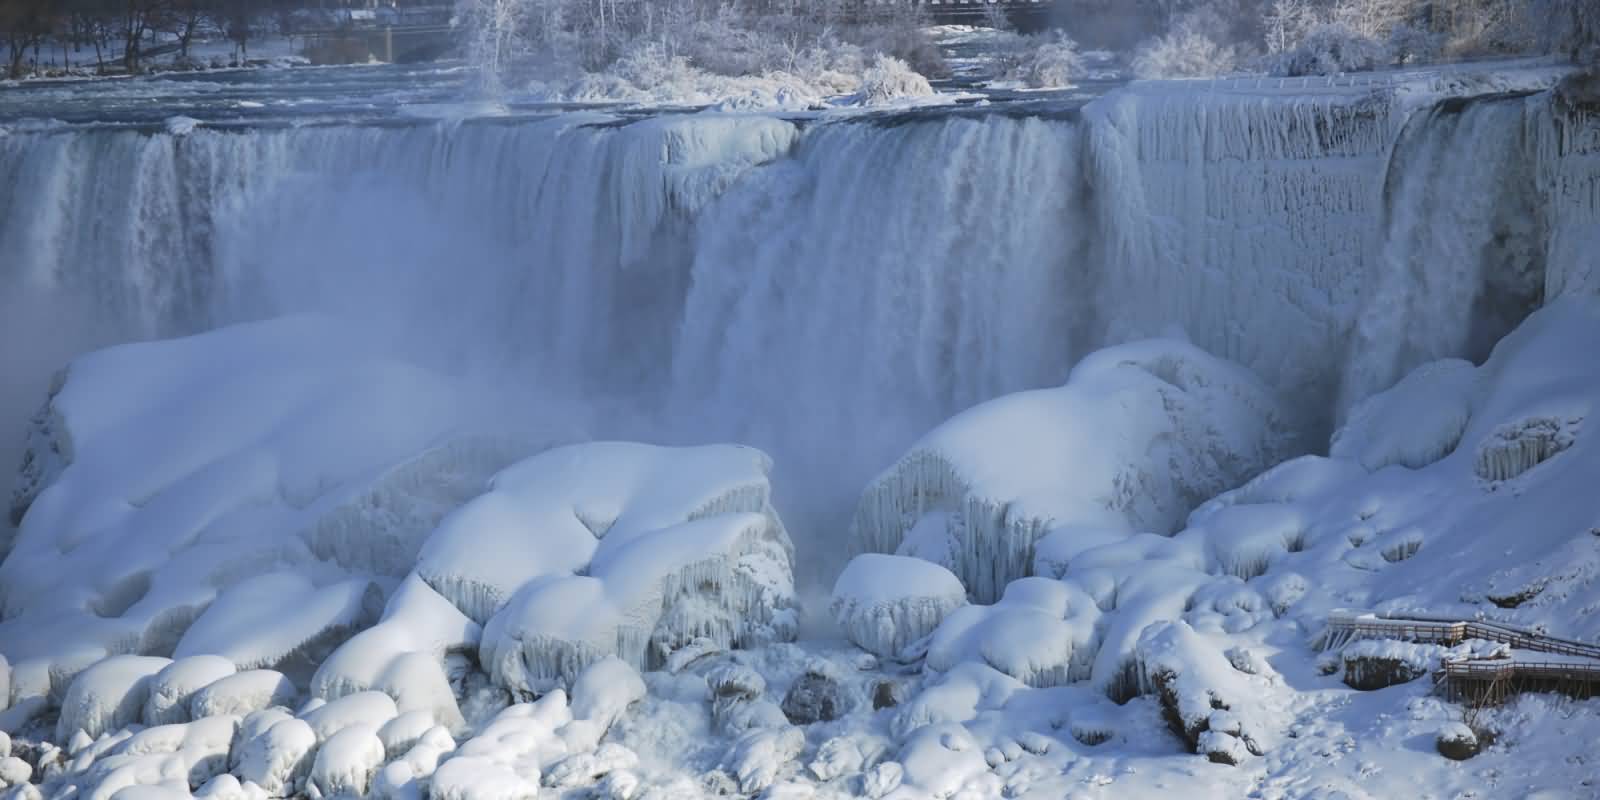 The Niagara Falls Frozen